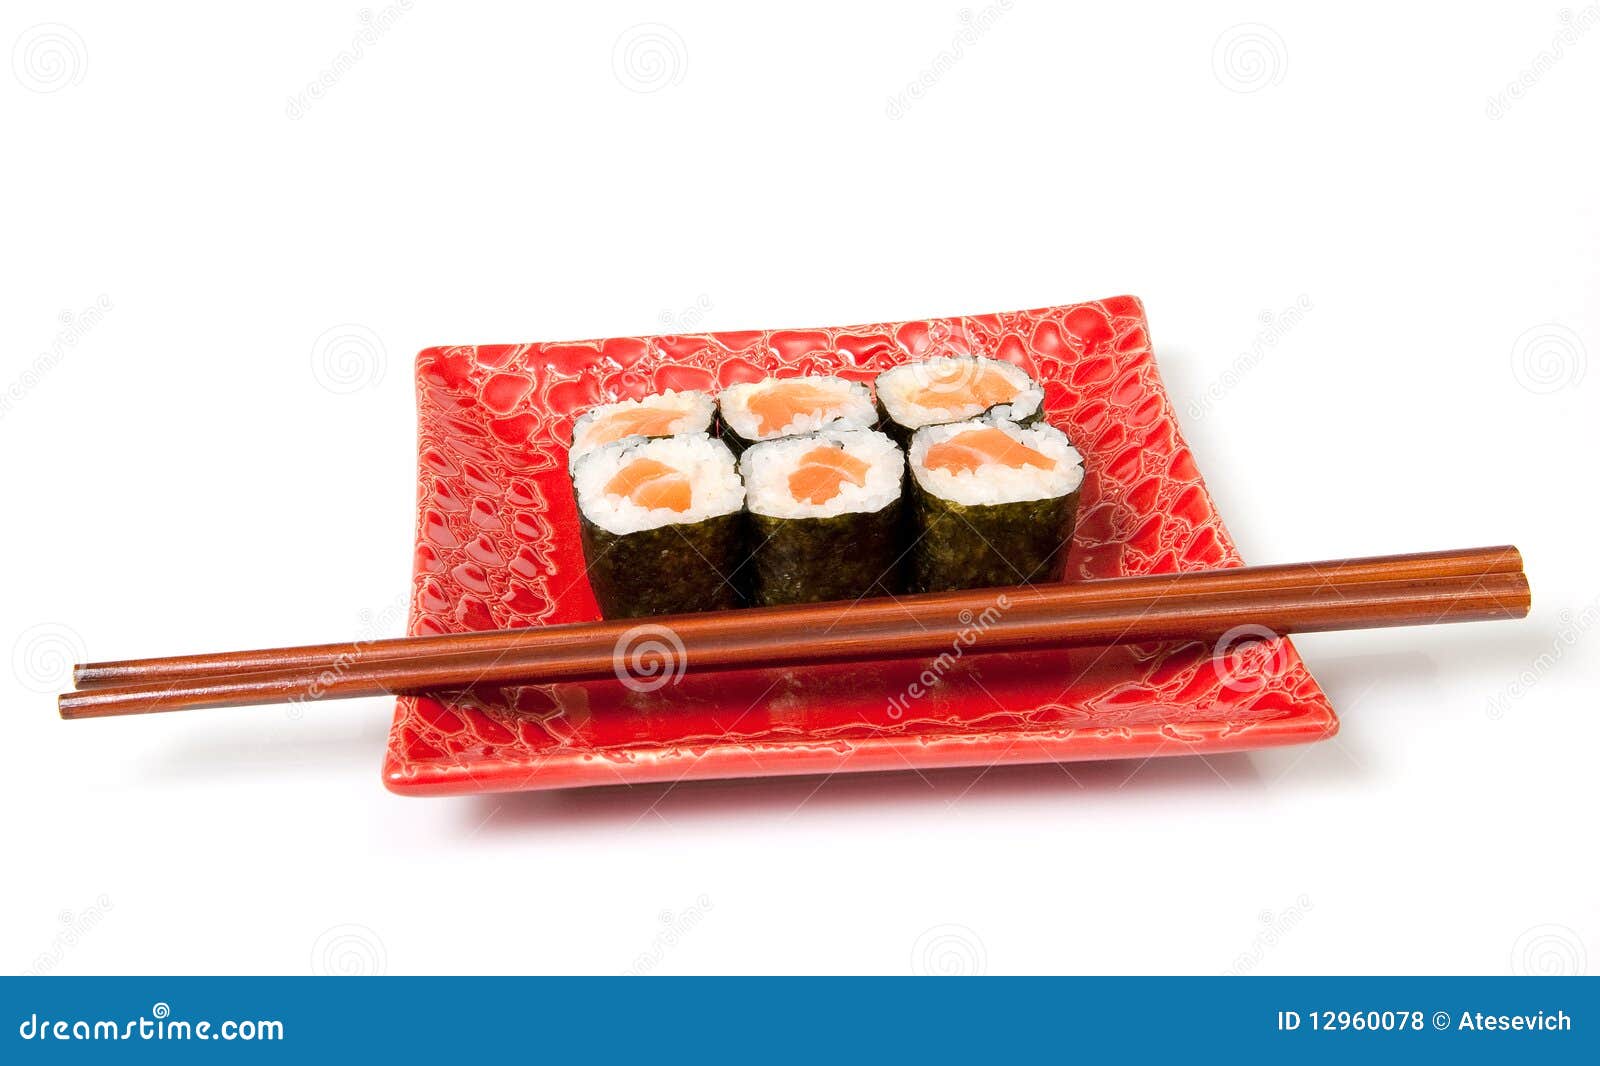 Body Sushi Royalty-Free Stock Image | CartoonDealer.com 